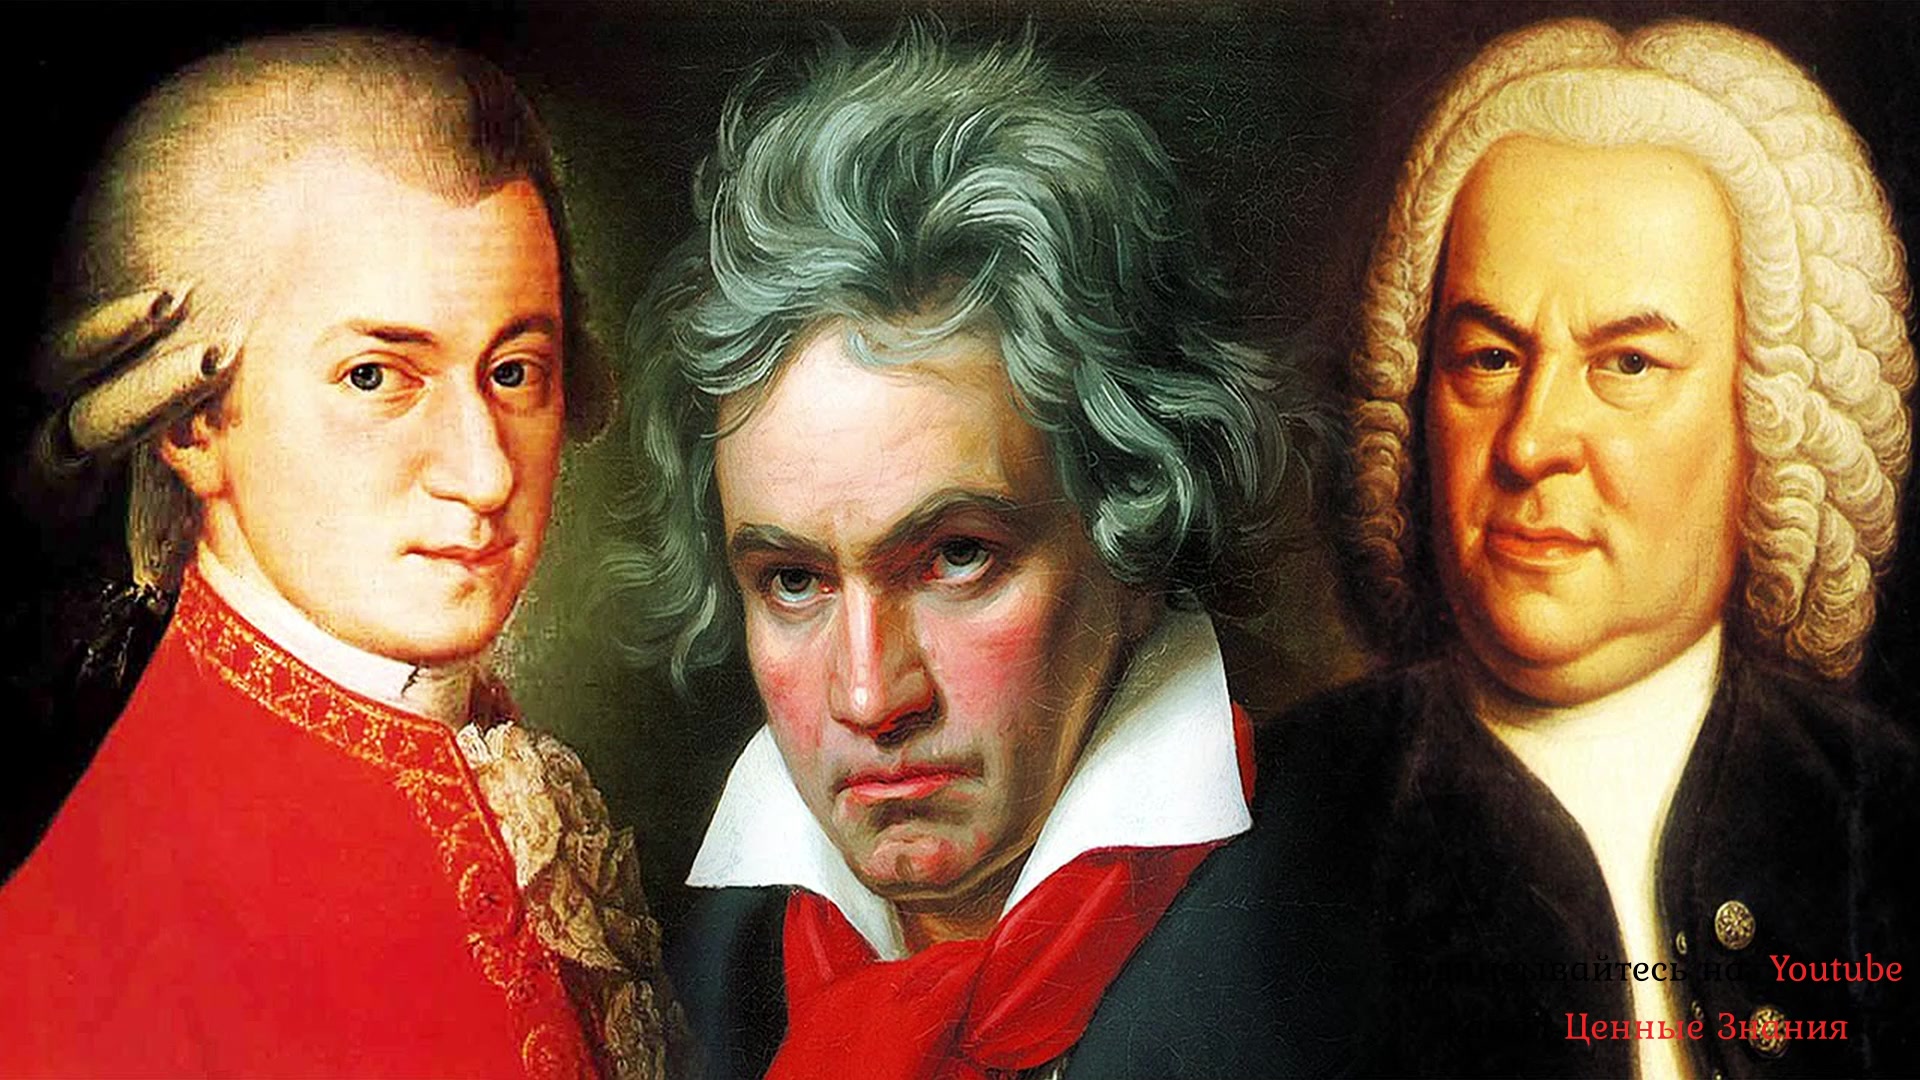 Бах моцарт бетховен вивальди. Гайдн Моцарт Бетховен Венские классики. Портрет Гайдна Моцарта и Бетховена. Композиторы -классики -Моцарт, Гайдн, Бетховен. Бах. Моцарт. Бетховен.